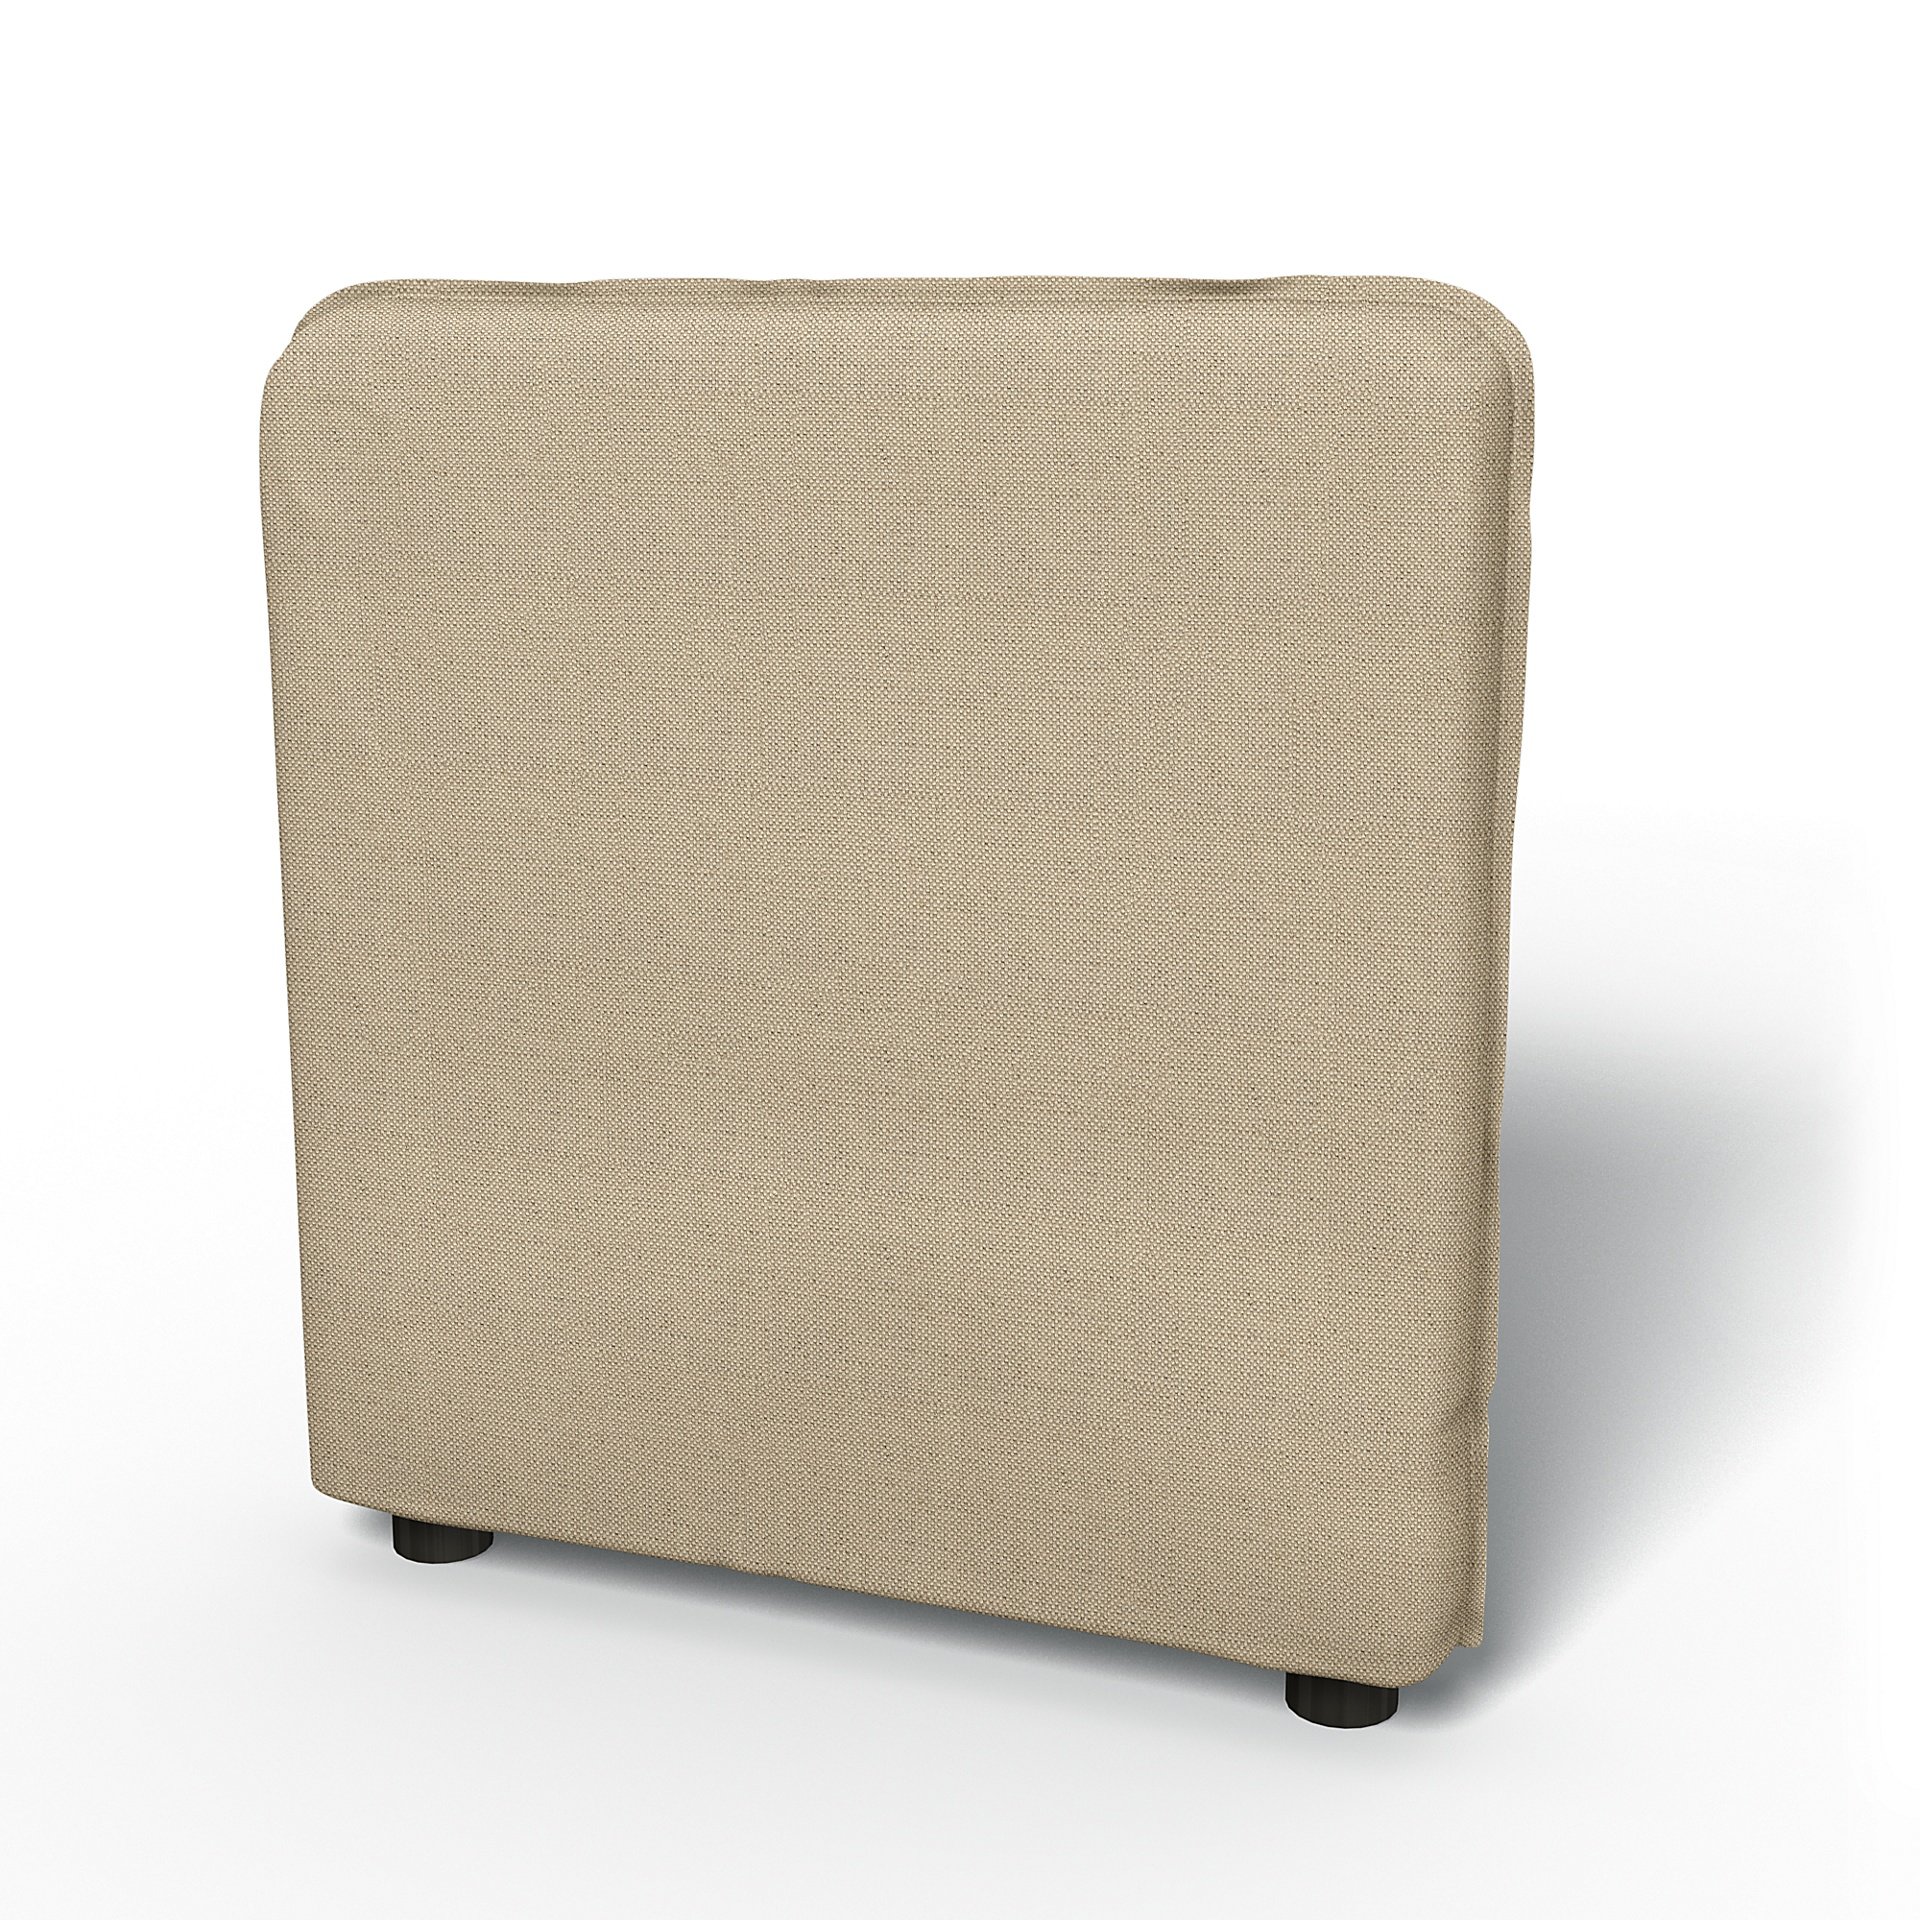 IKEA - Vallentuna Armrest Cover (80x60x13cm), Unbleached, Linen - Bemz